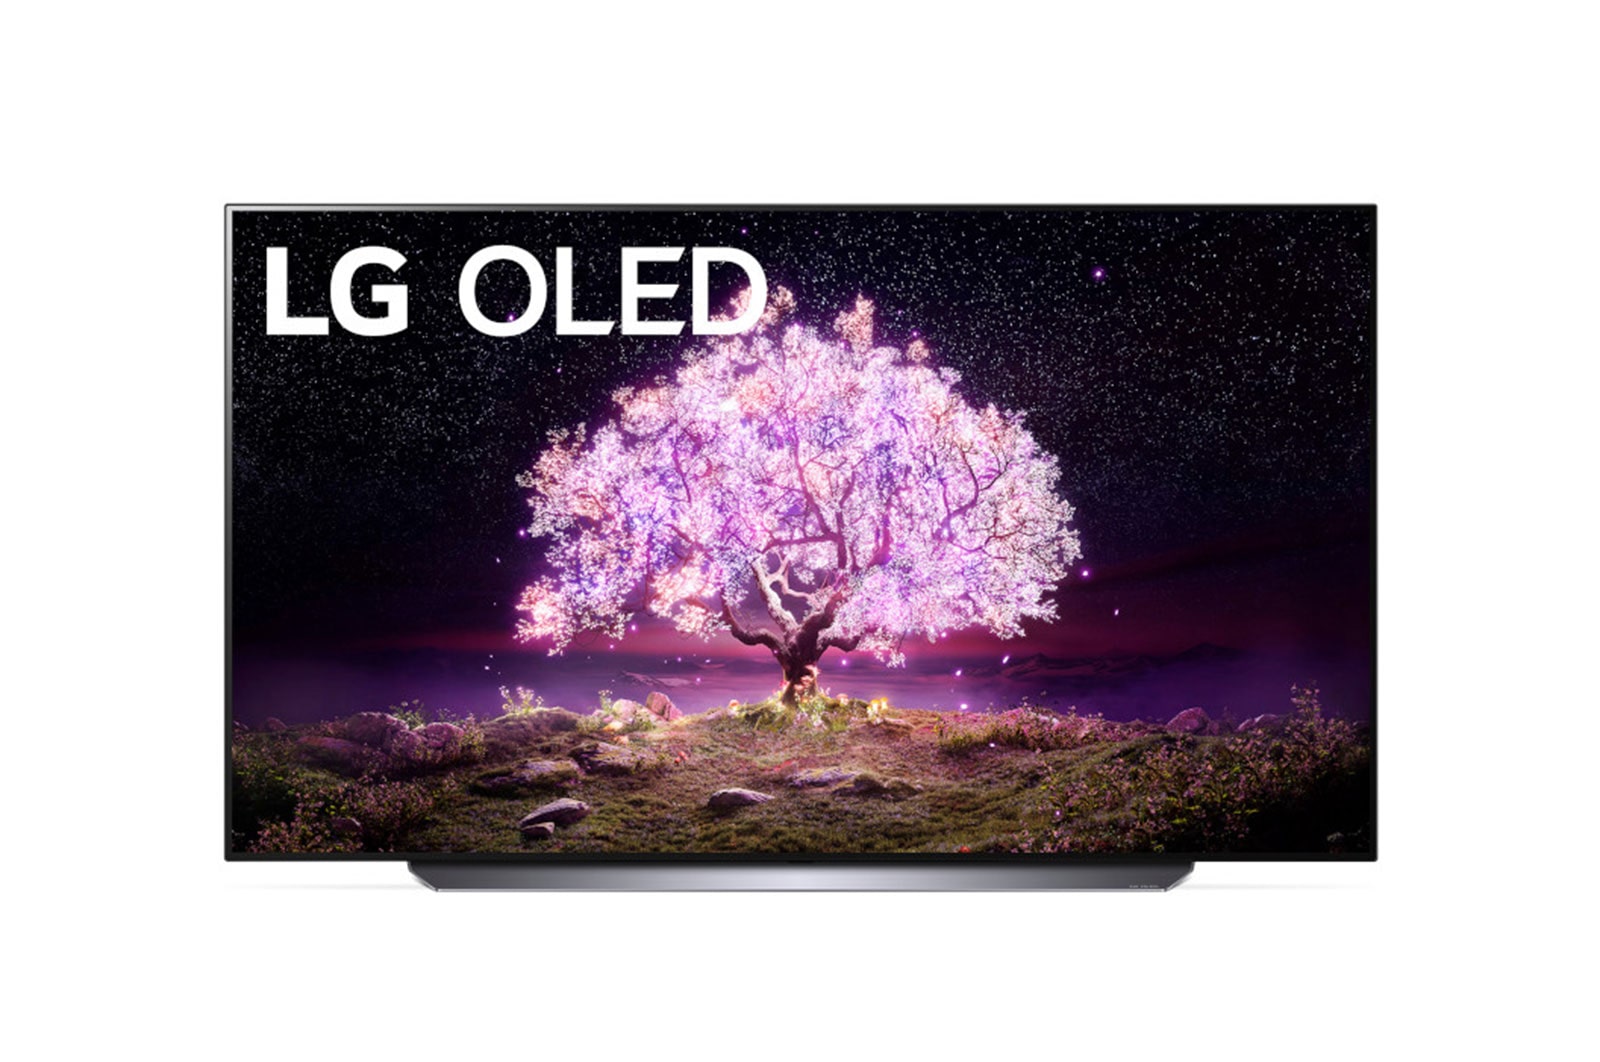 LG C1 77" OLED TV deals on LG Members website $2025